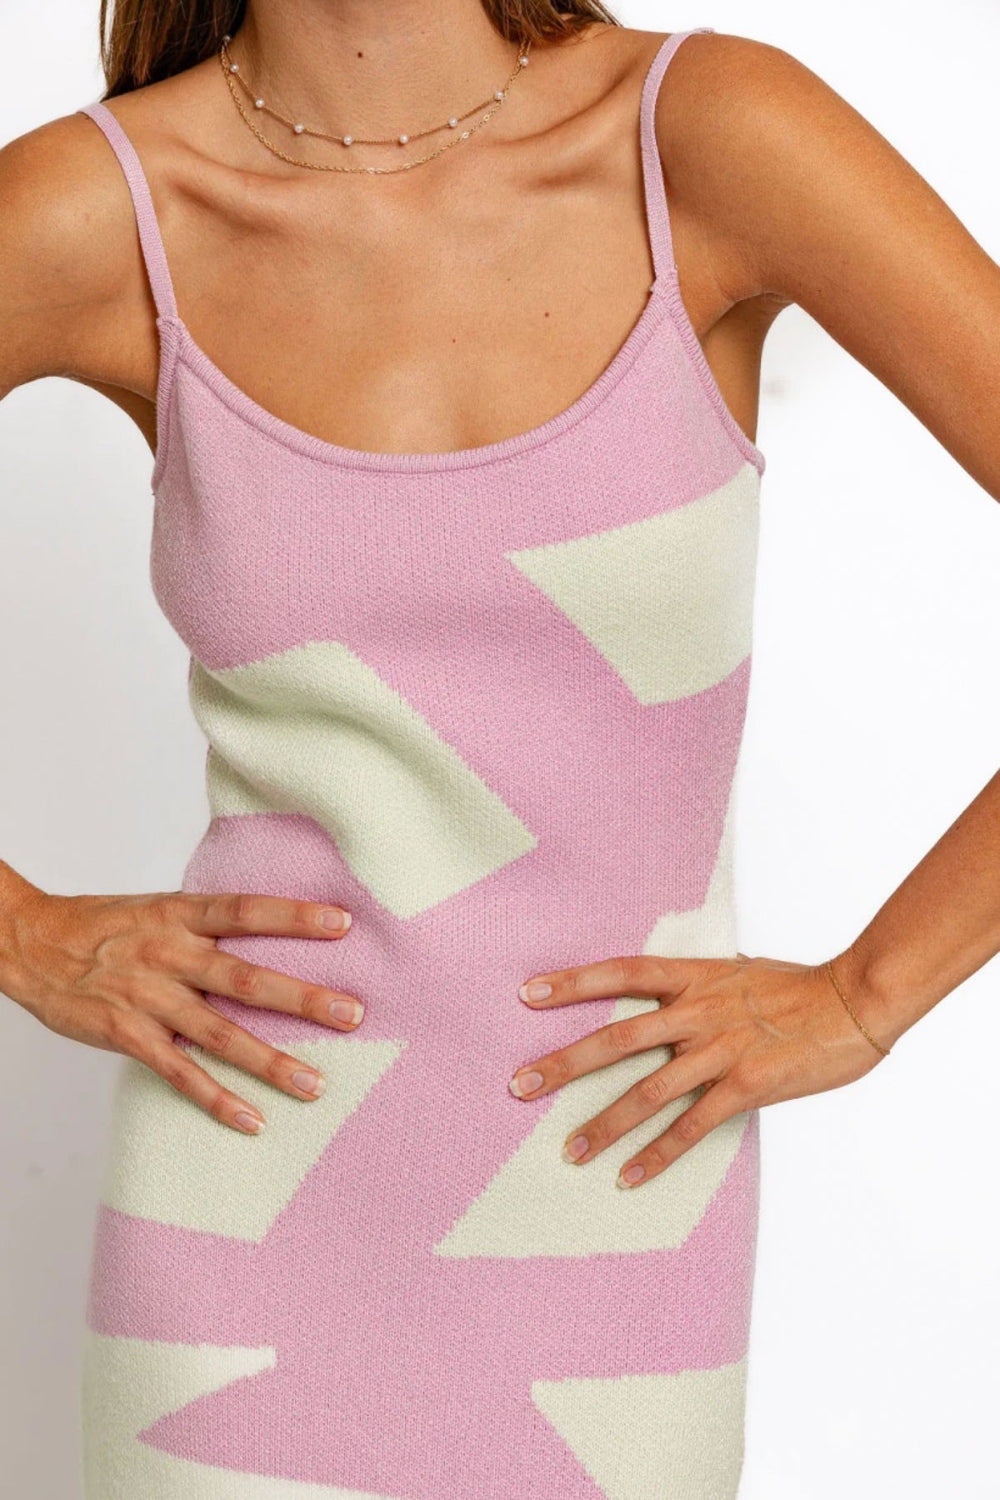 TEEK - Abstract Pink Mint Contrast Sweater Cami Dress DRESS TEEK Trend   